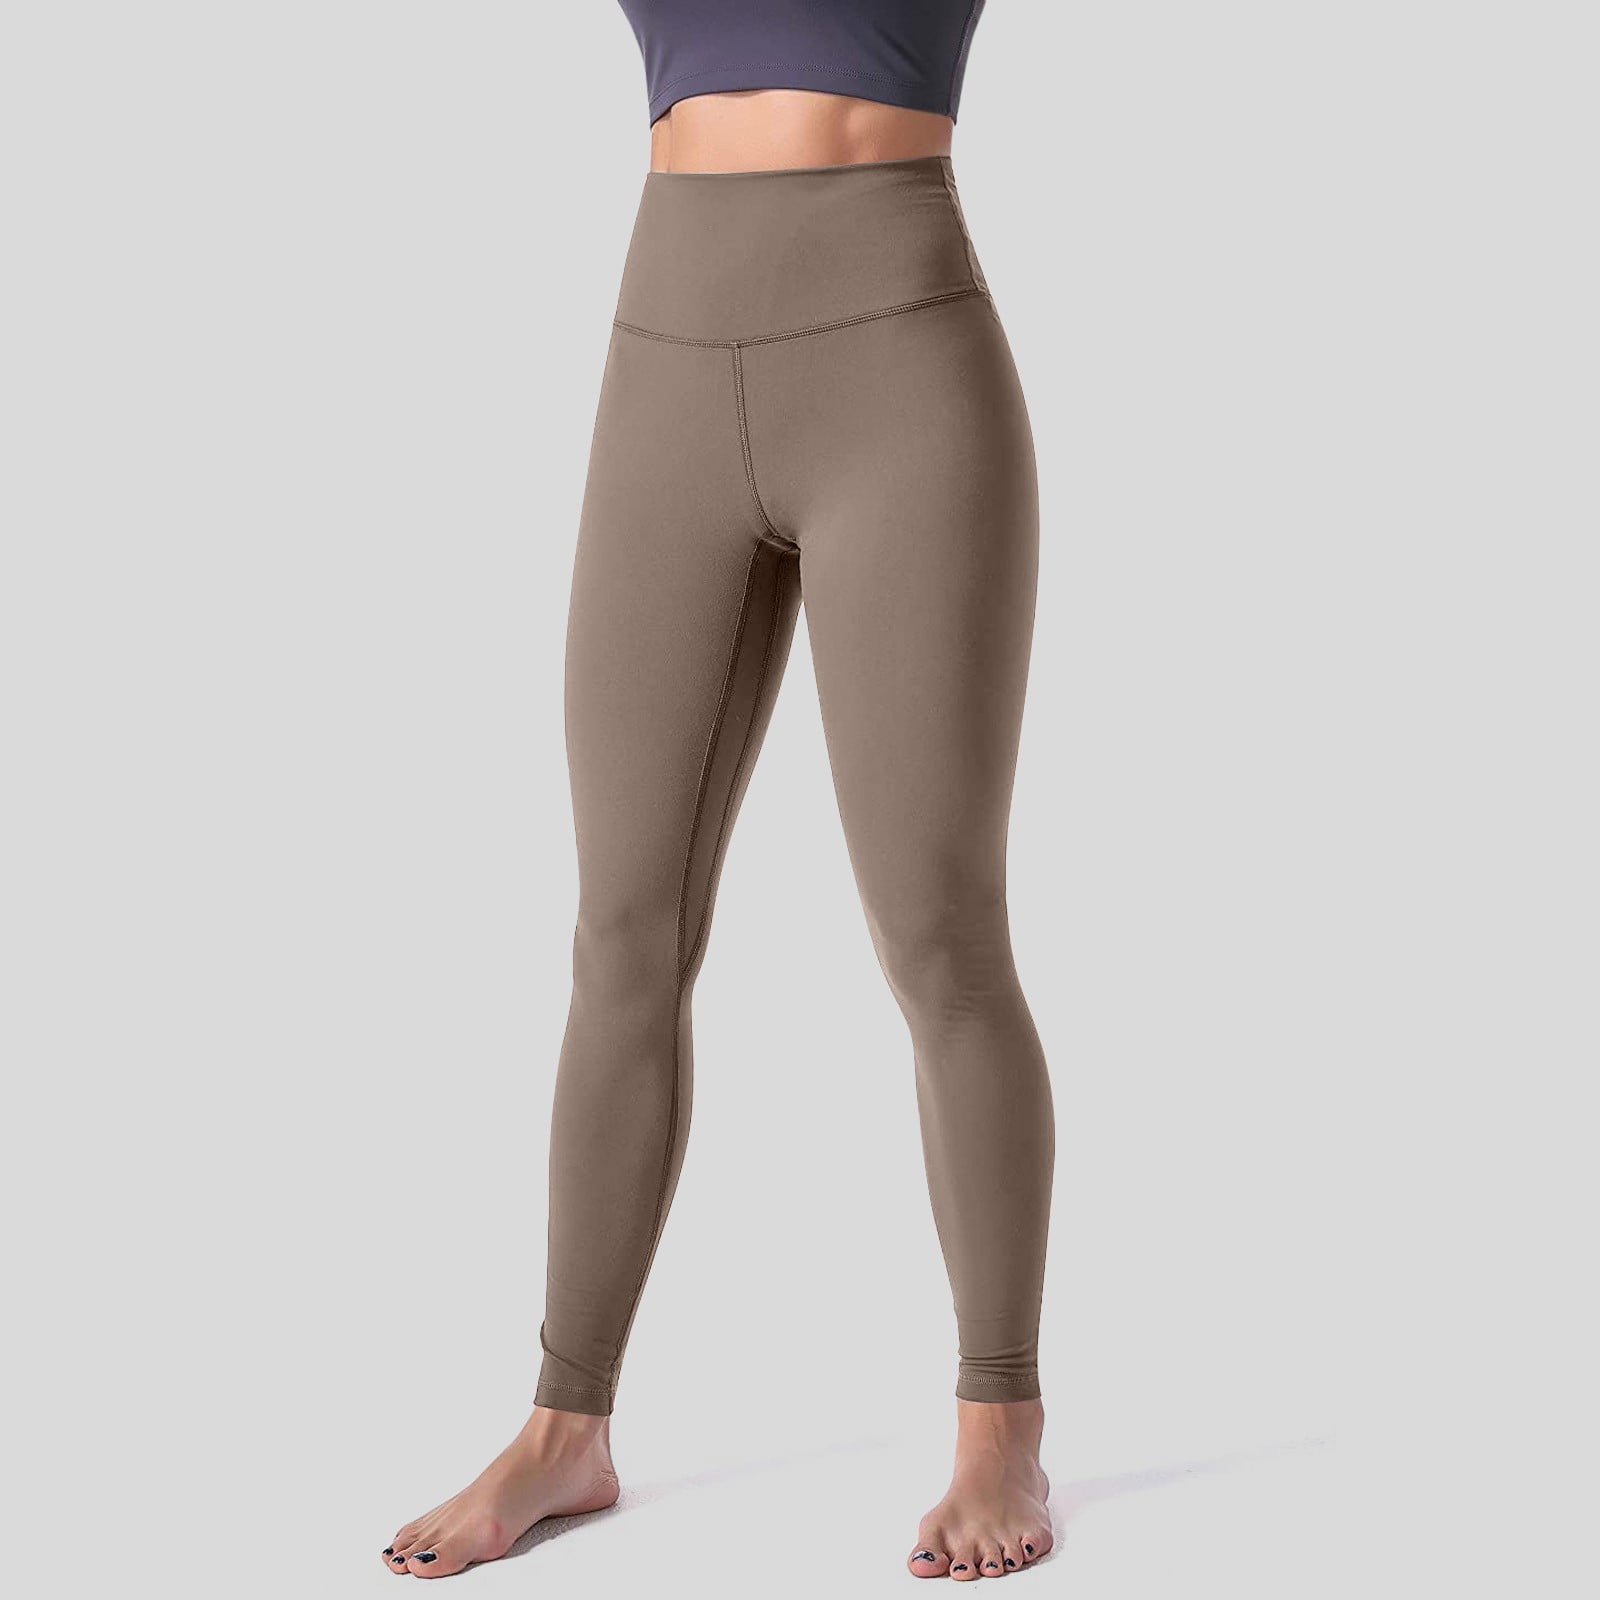 Vestitiy Womens High Waisted yoga pants Control Soft Workout Gym ...